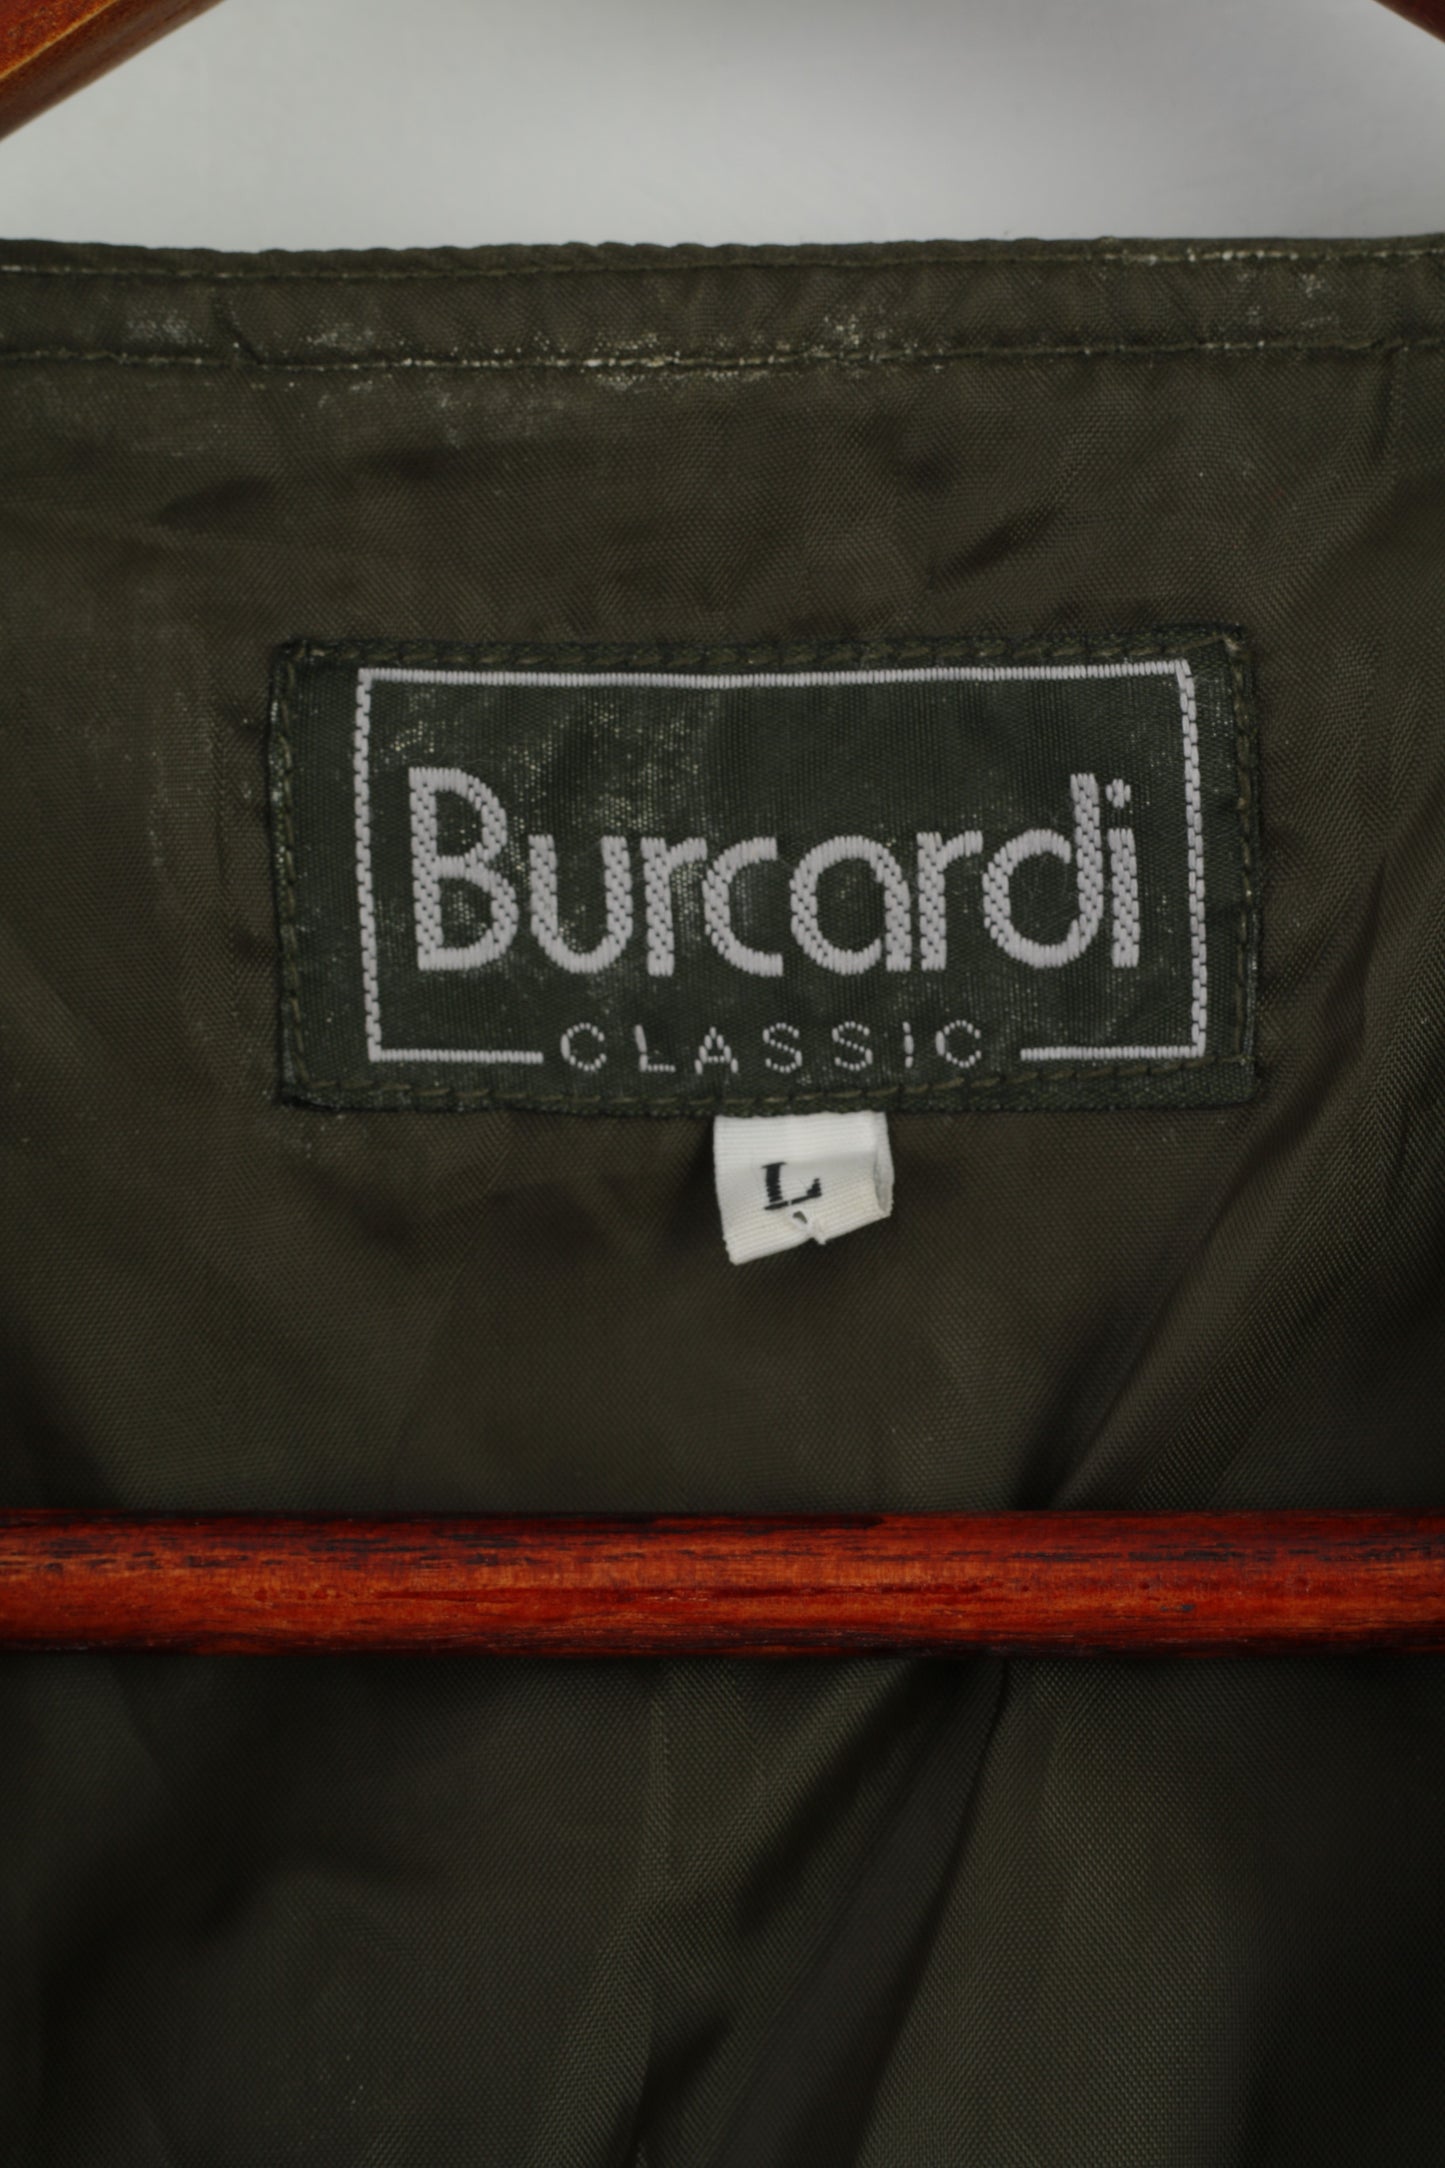 Burcardi Classic Mens L Gilet in pelle verde imitazione leggero bodywarmer